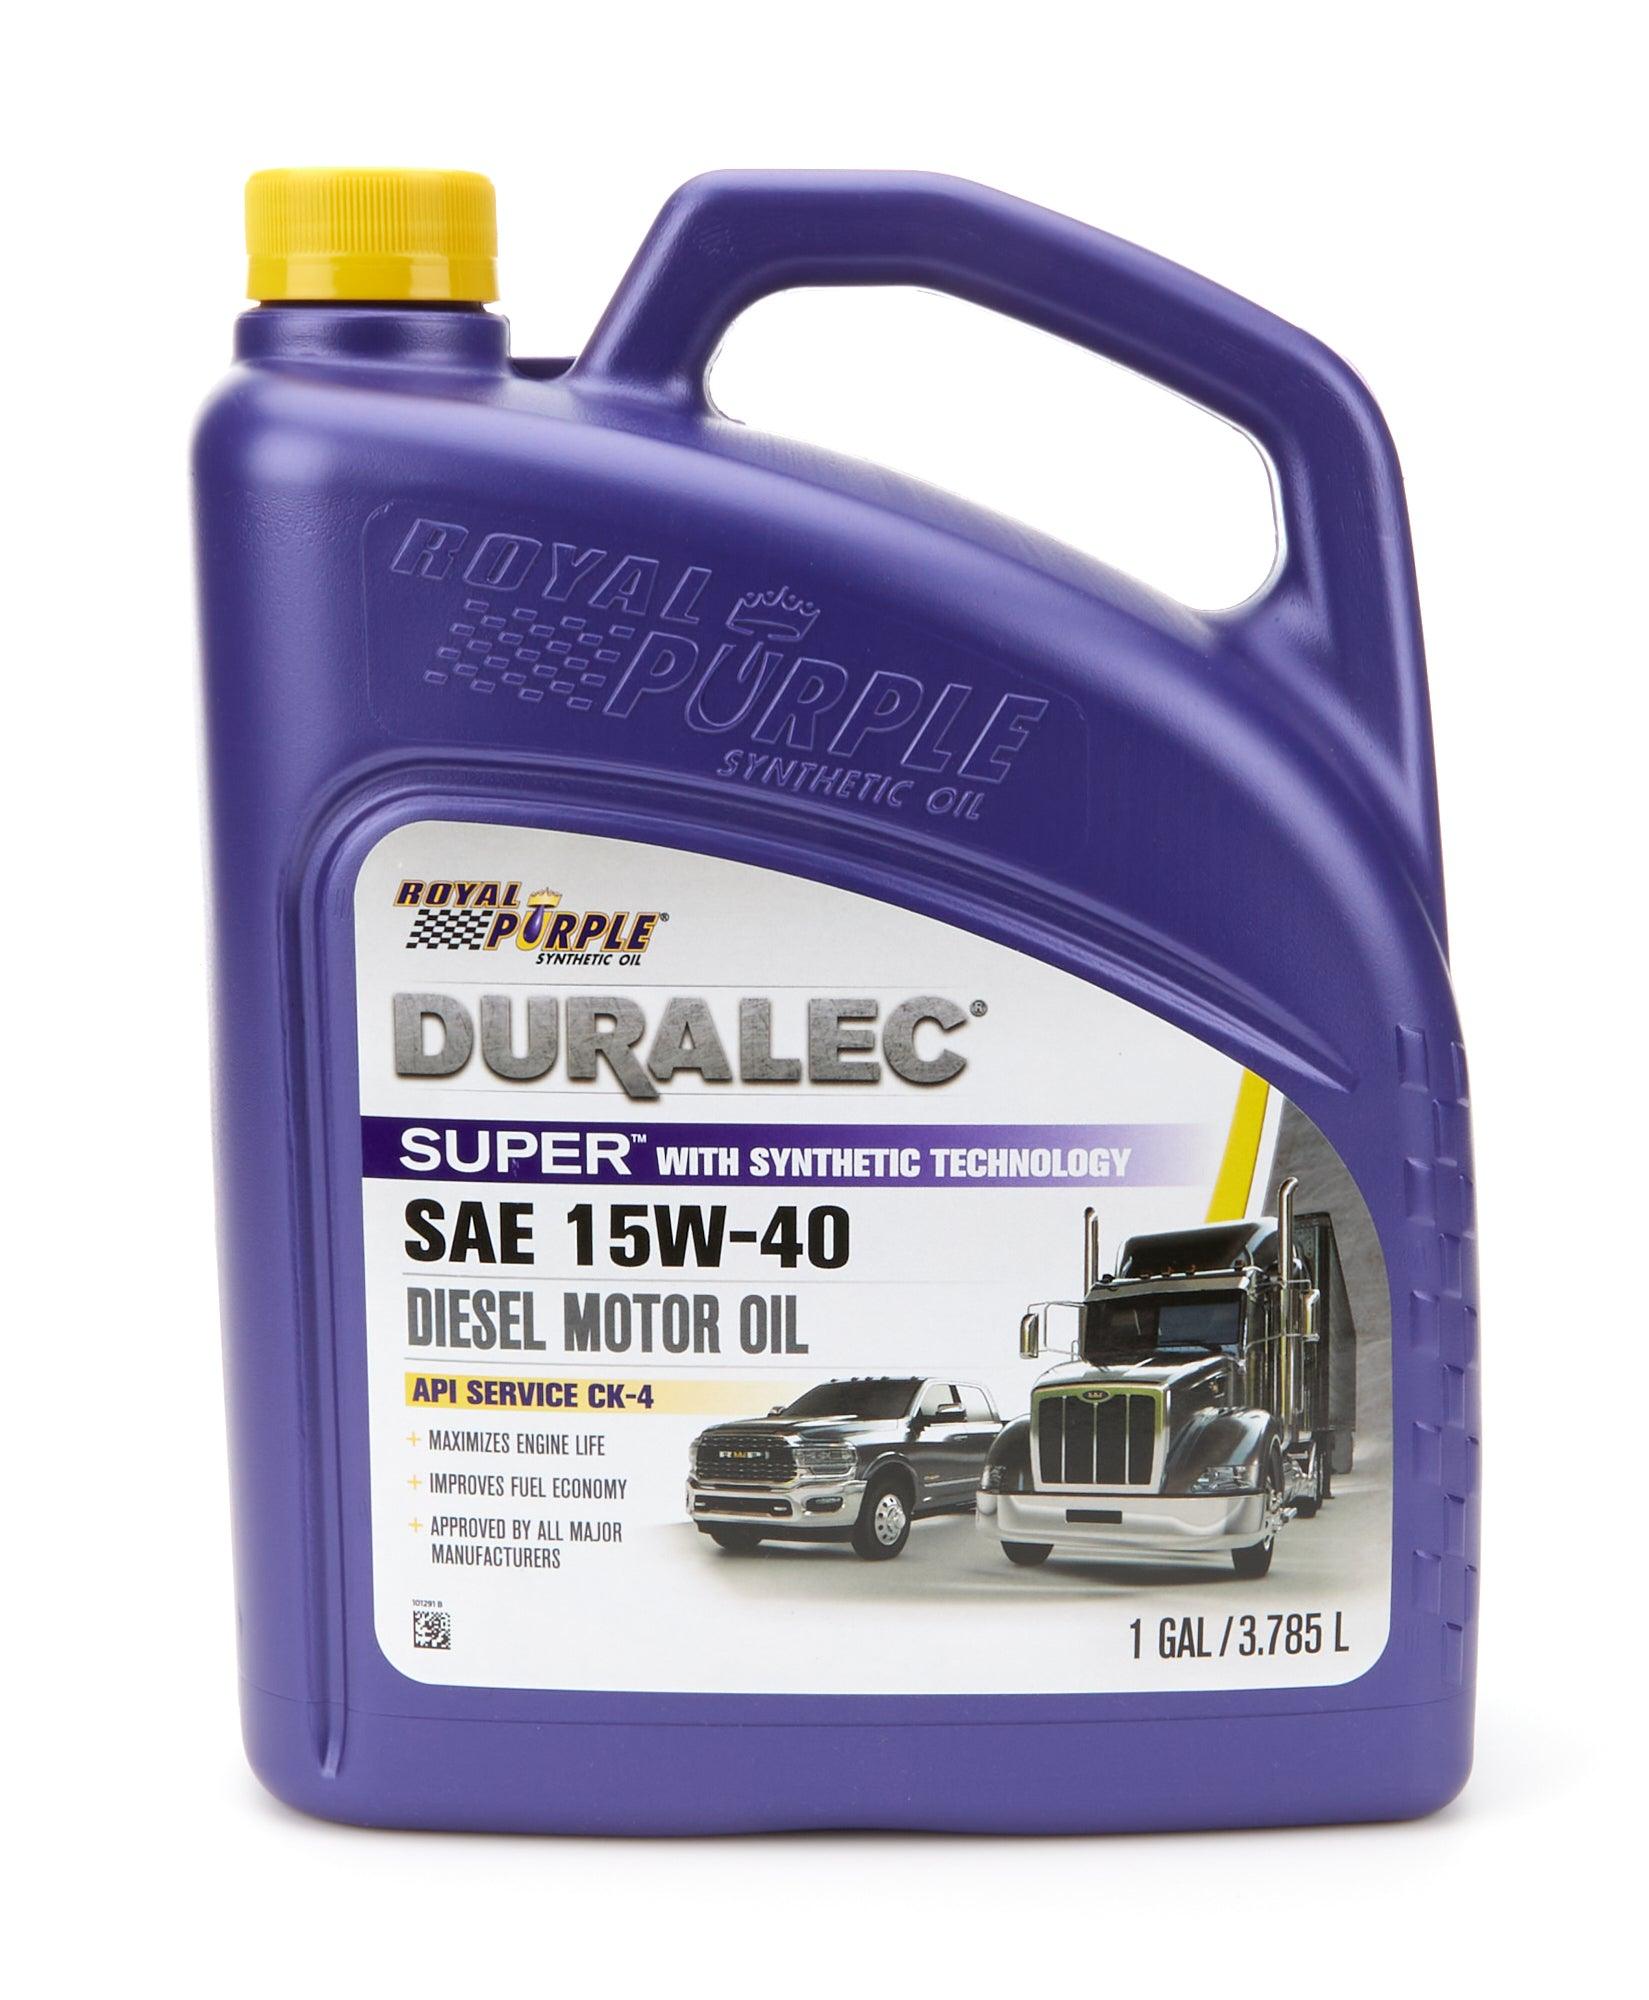 Duralec Super 15w40 Oil 1 Gallon - Burlile Performance Products